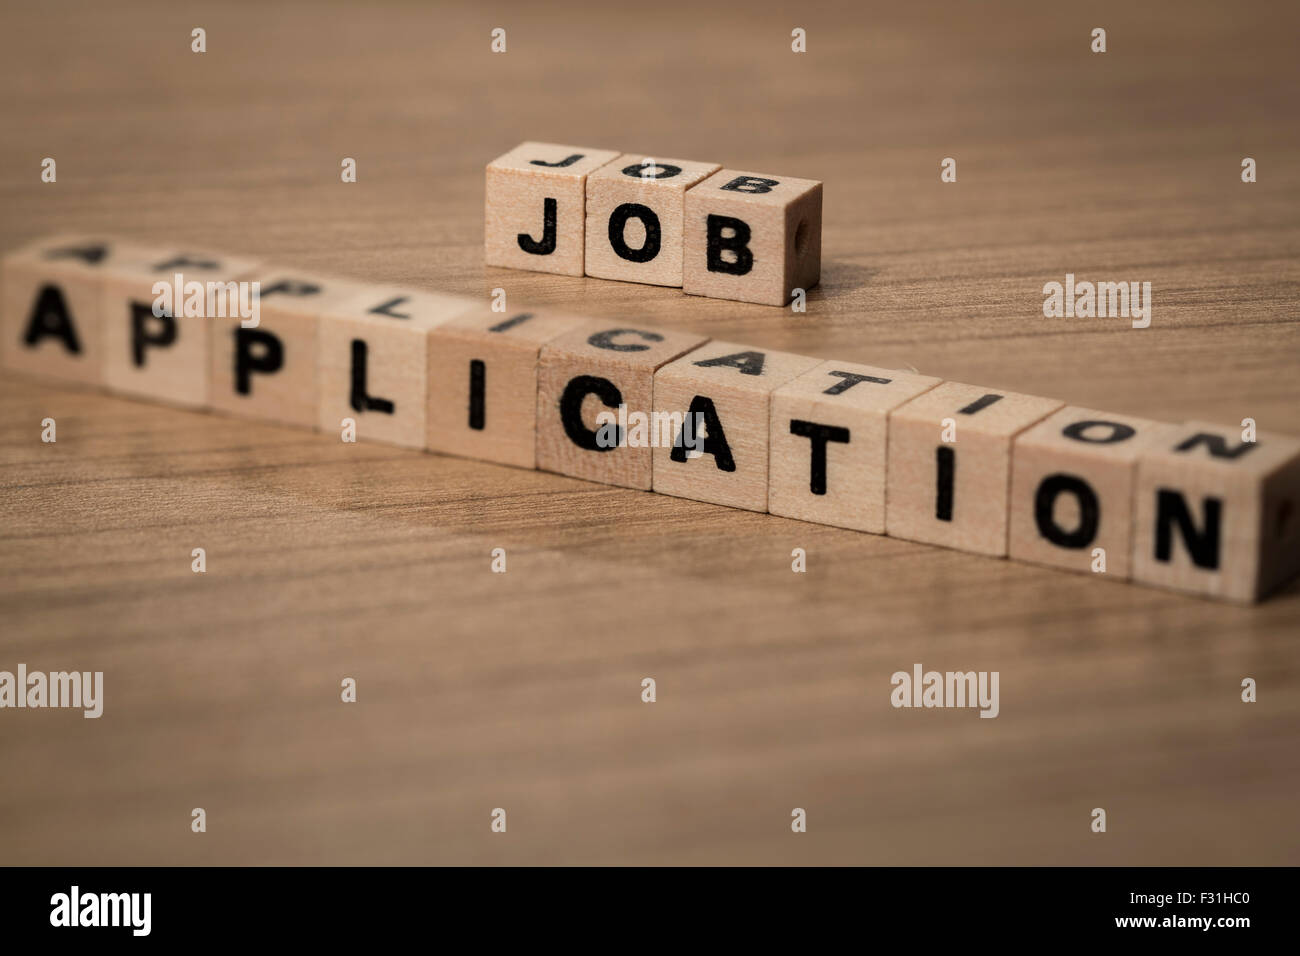 Job Application written in wooden cubes on a desk Stock Photo